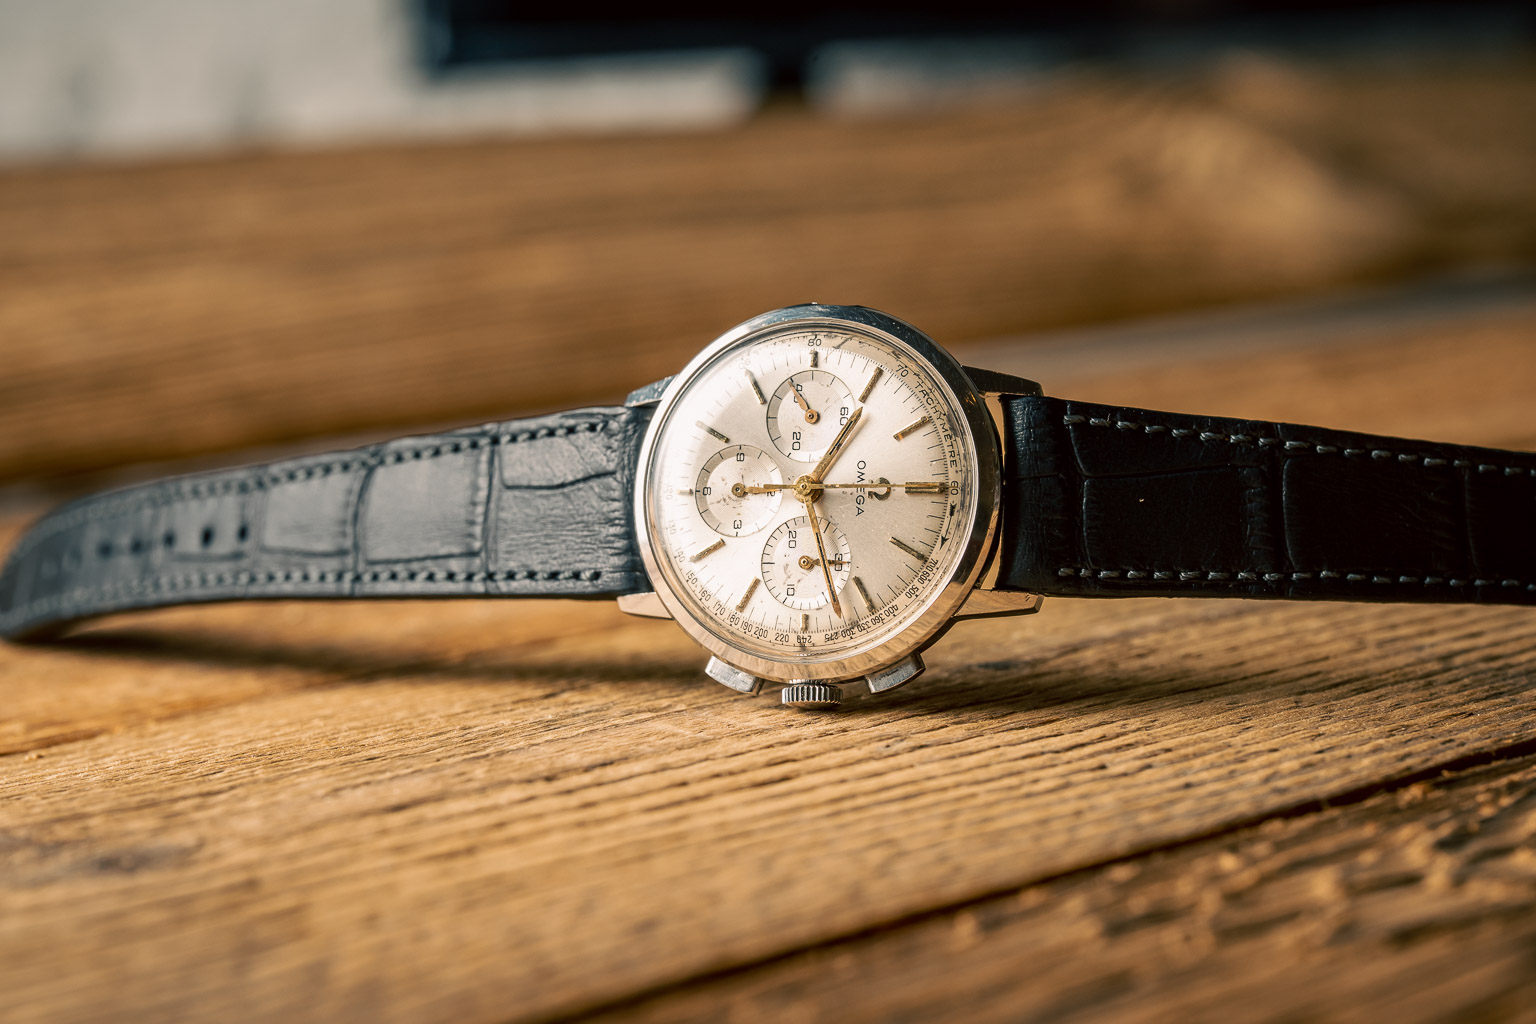 Vintage Omega chronograph 101.010 watch